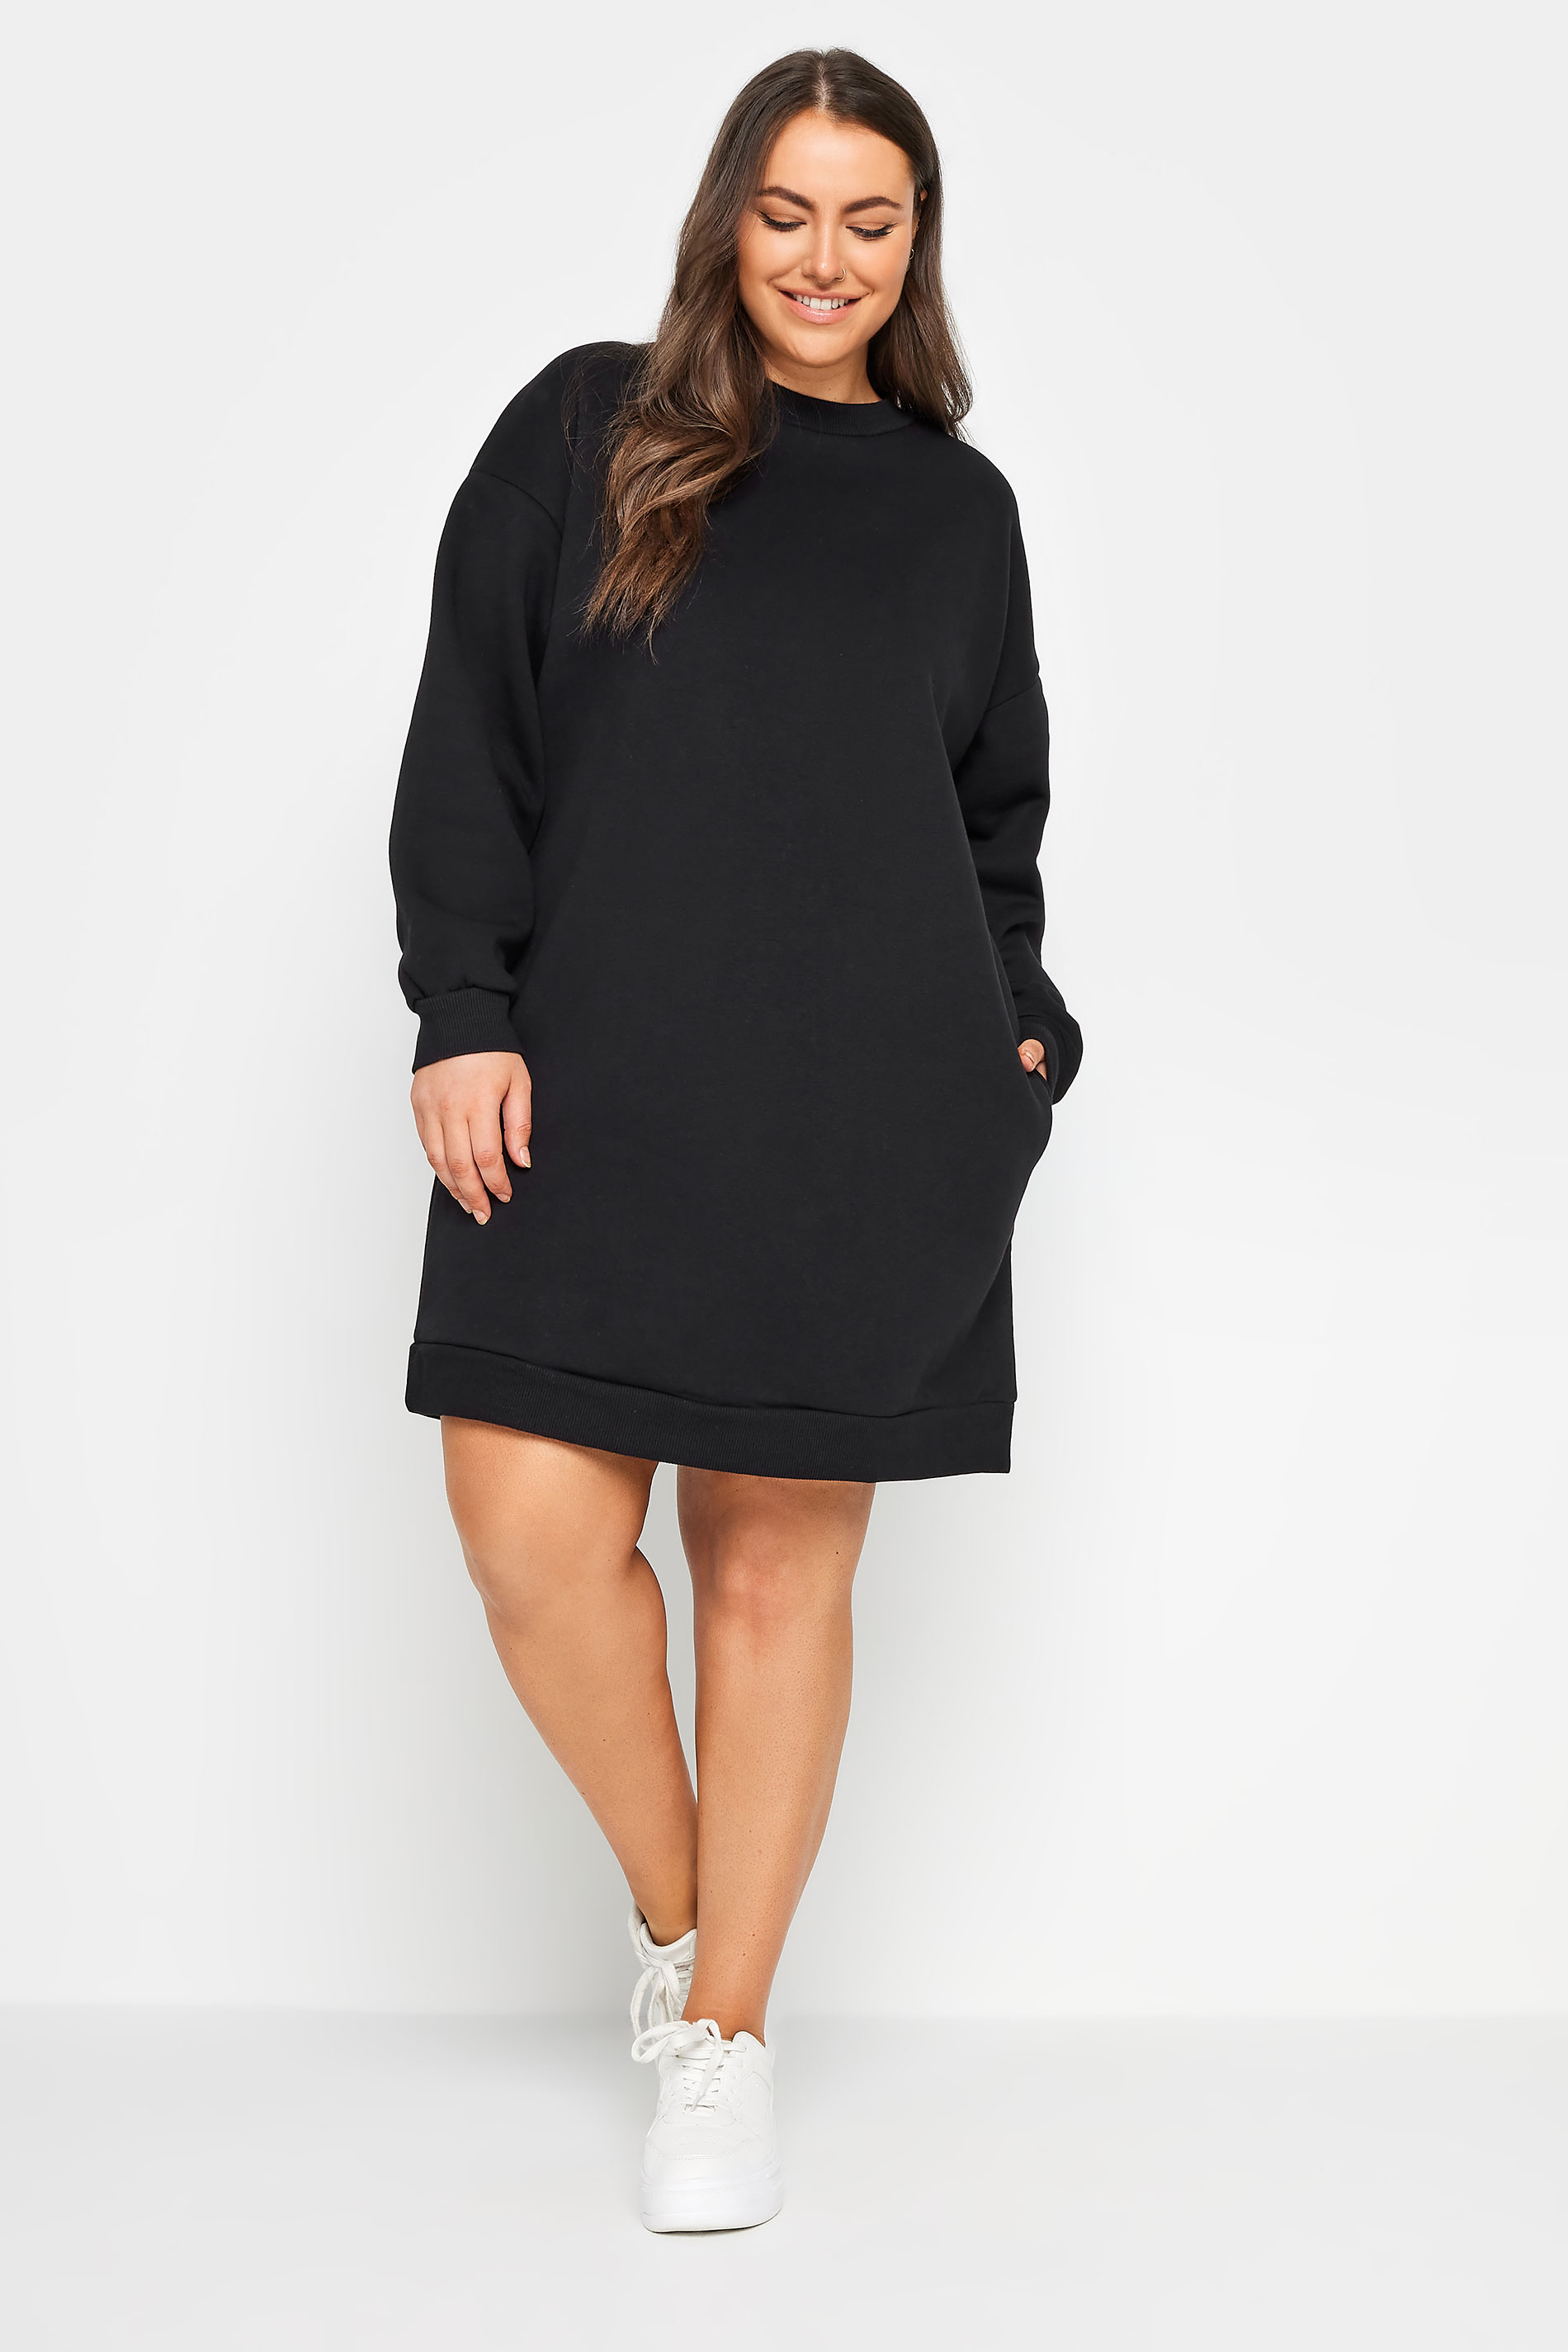 YOURS Plus Size Black Sweatshirt Dress | Yours Clothing 2